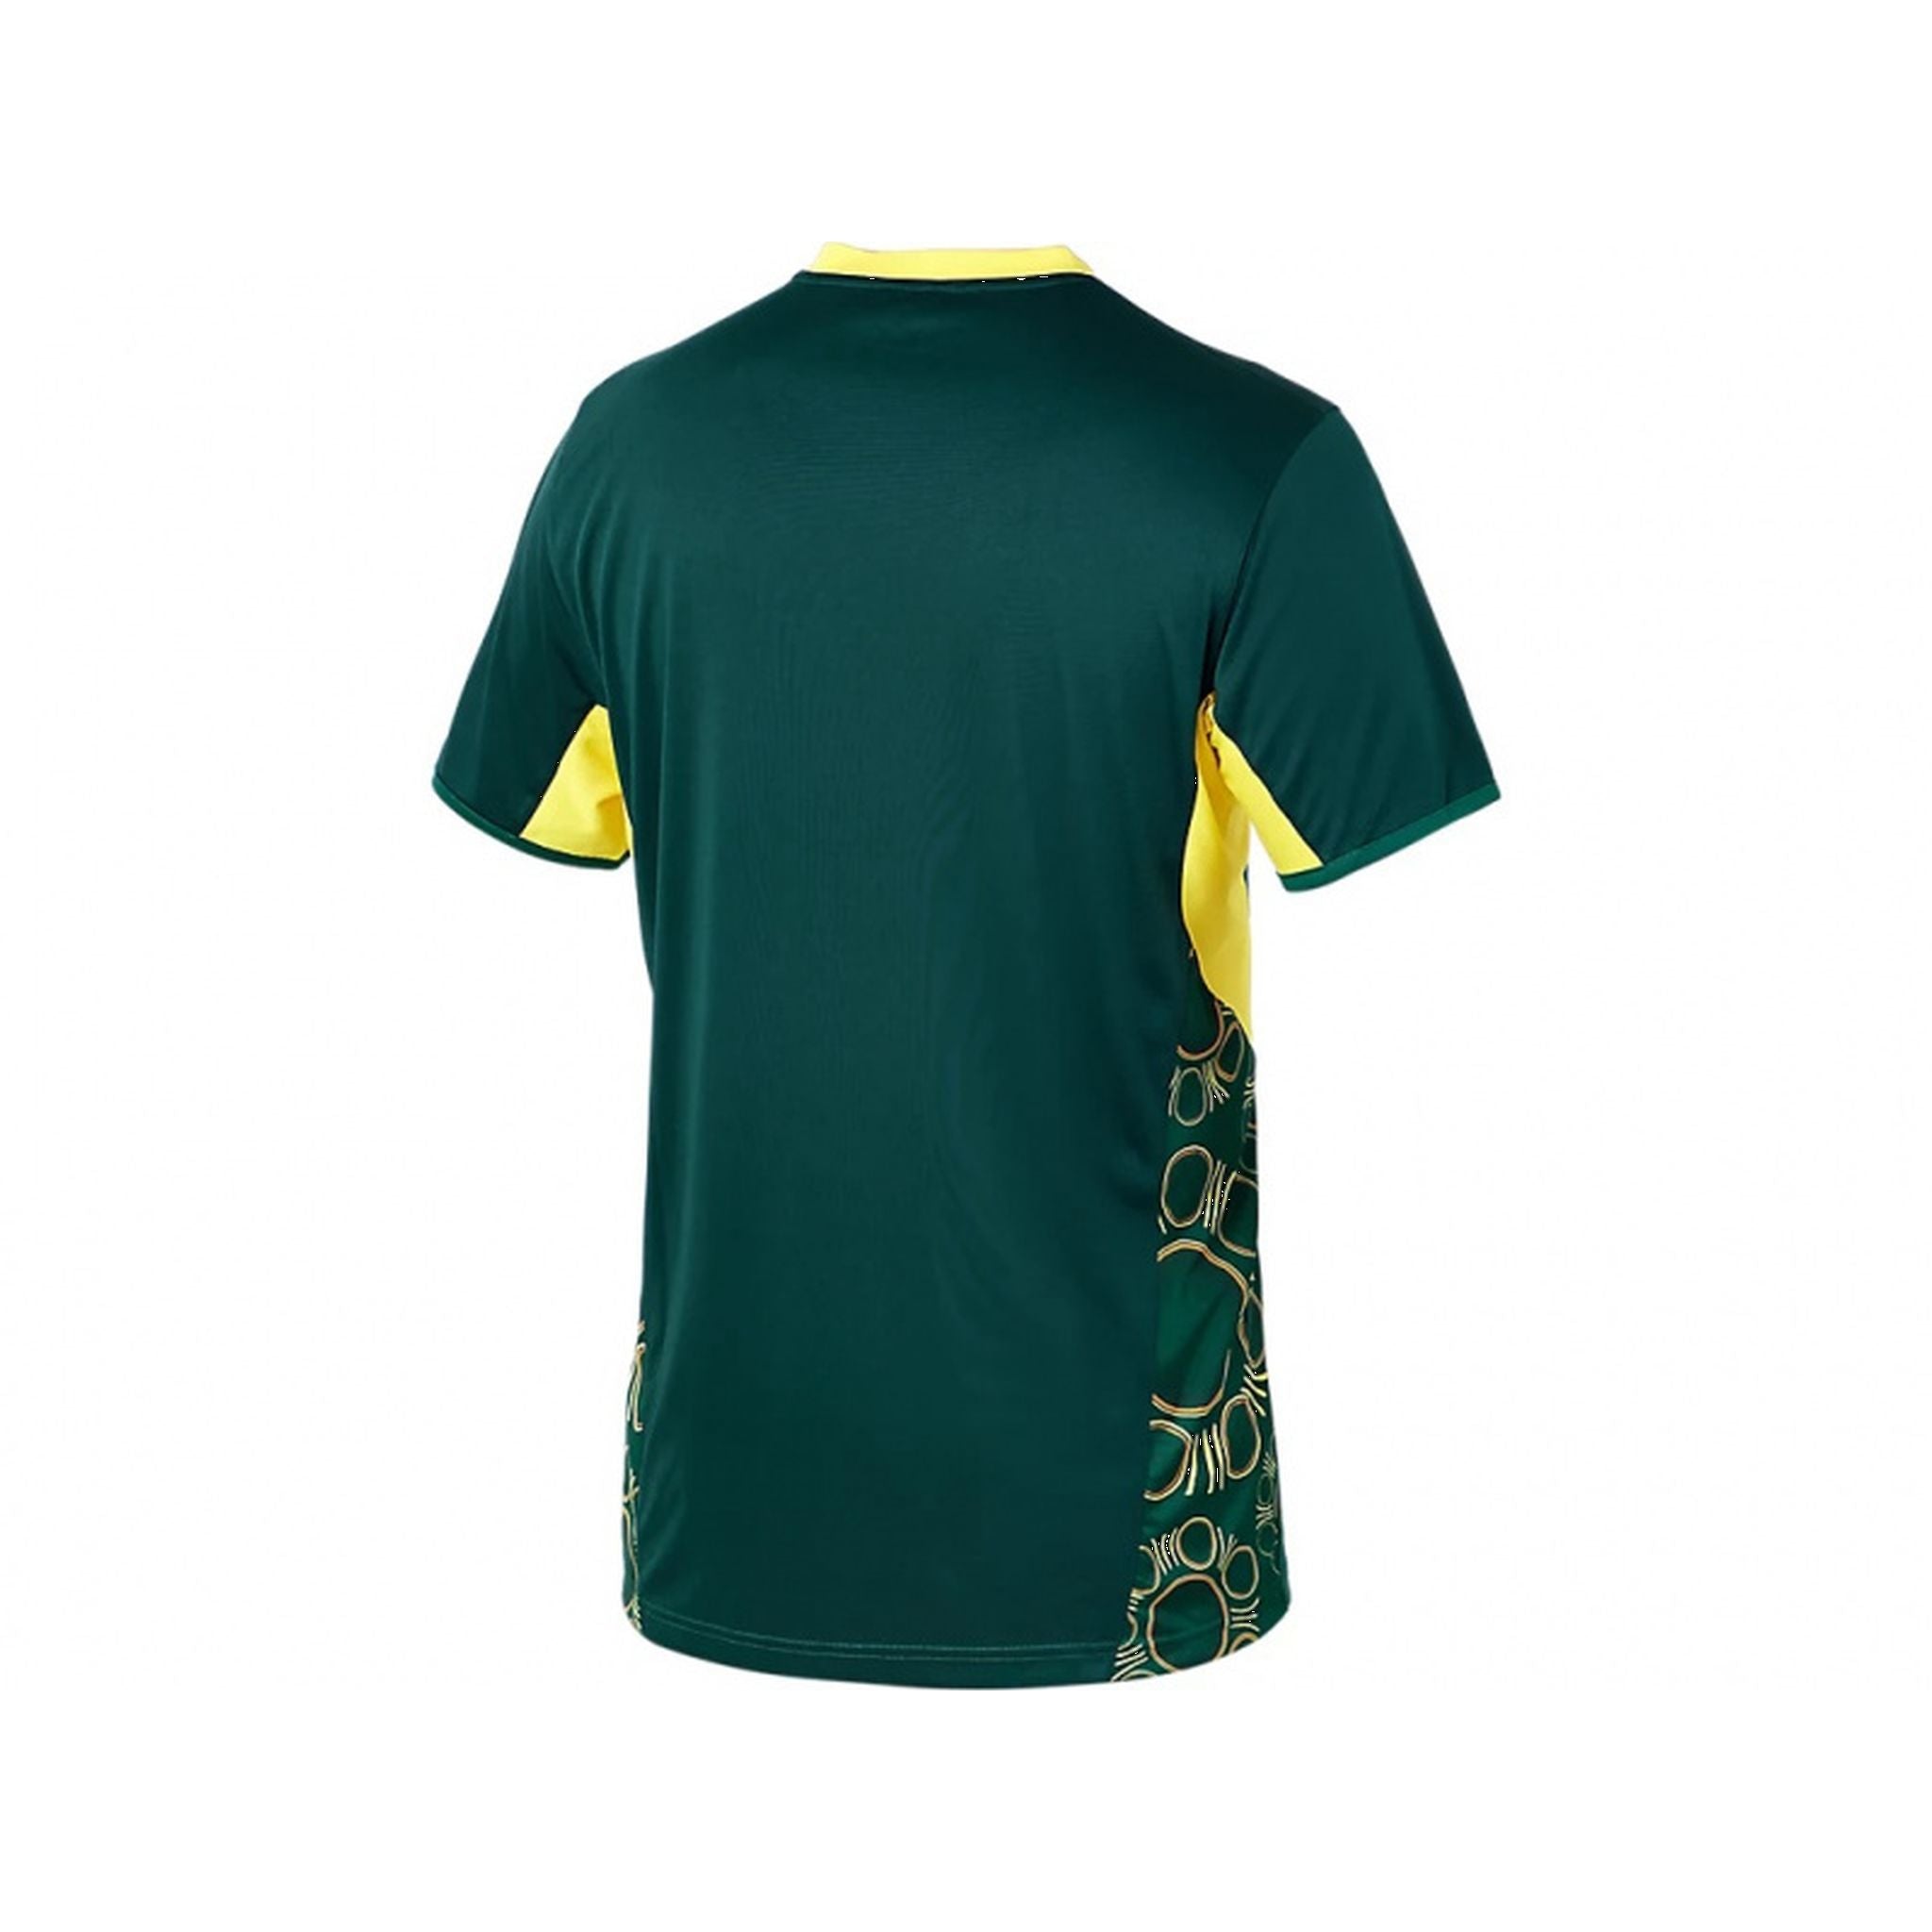 ASICS Cricket Australia Youth Replica T20 Shirt